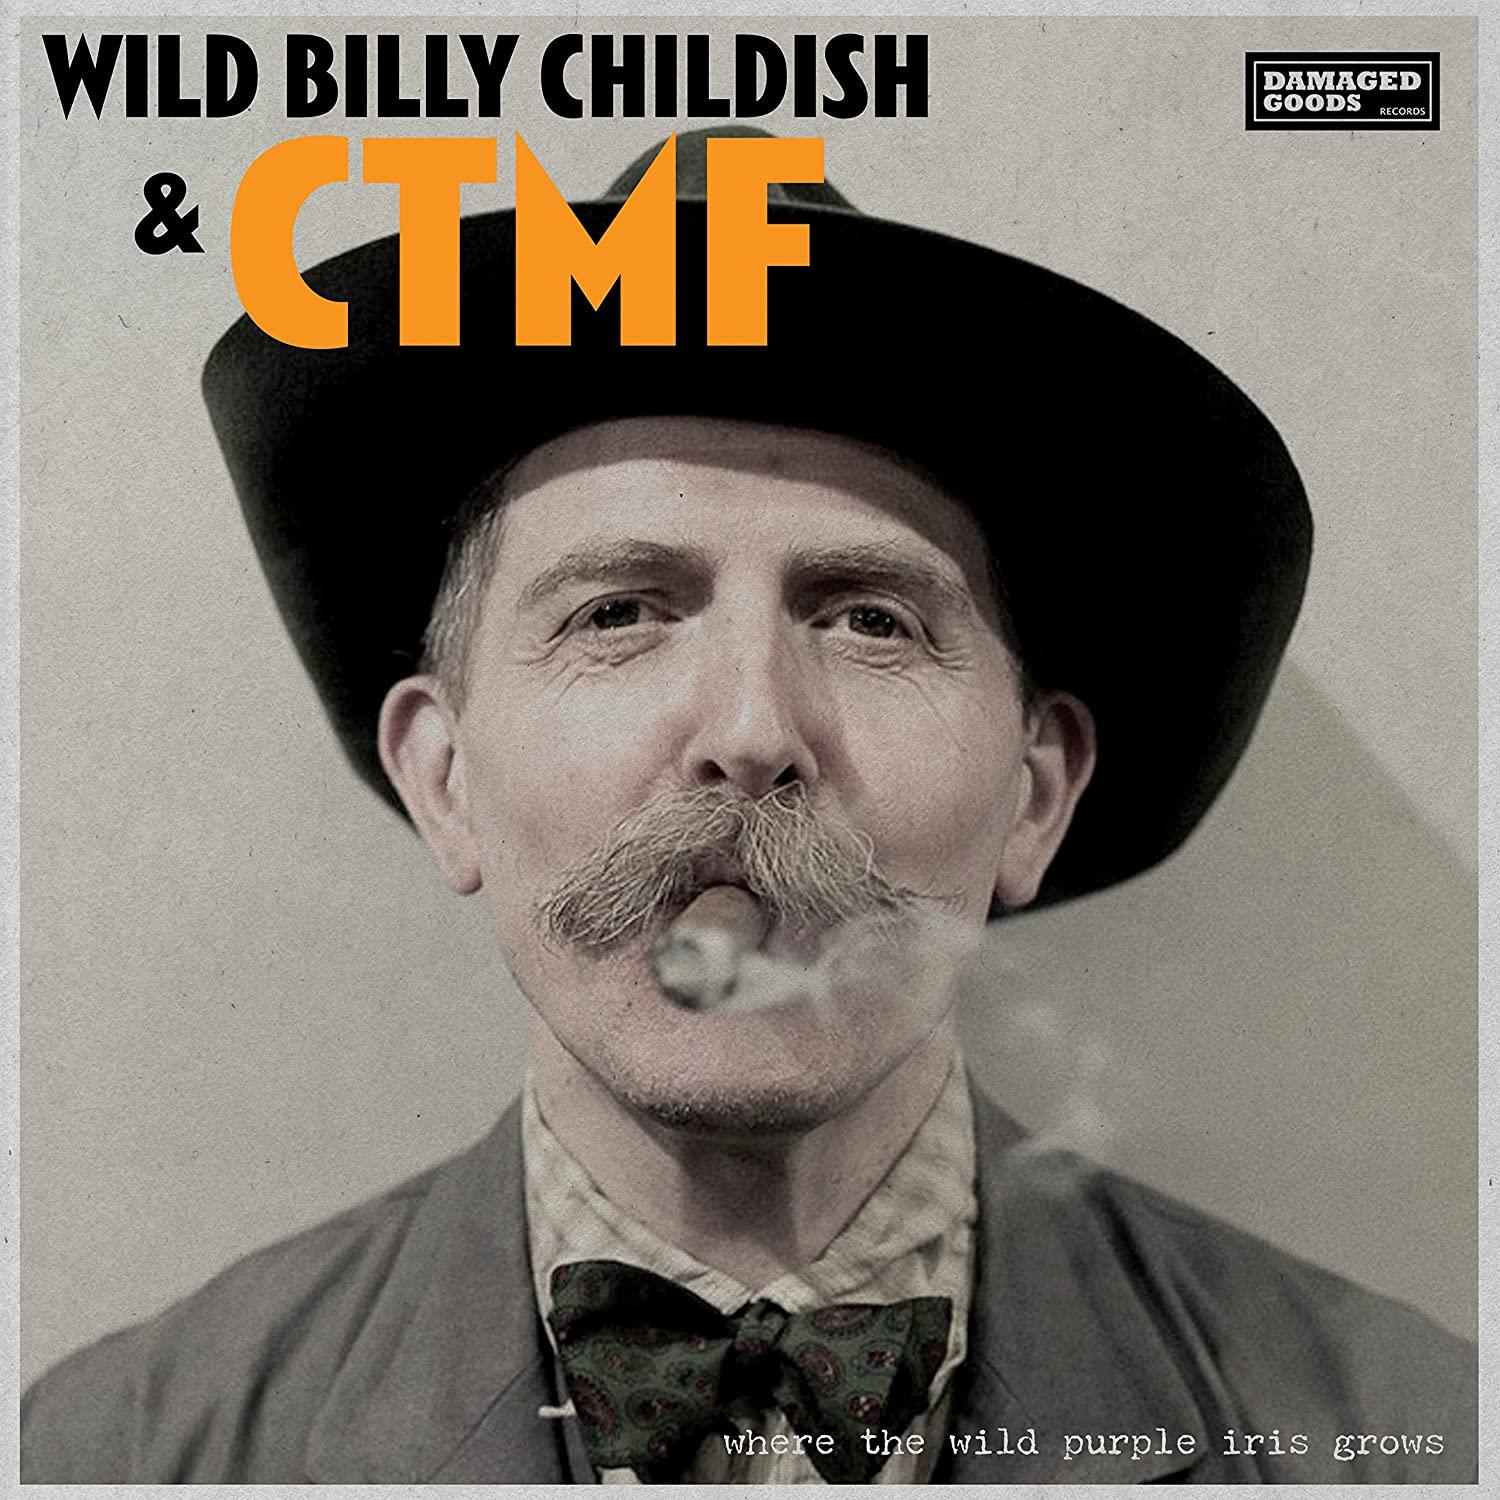 Where (CD) Wild CTMF Iris Purple Grows Wild & - Billy Childish - The